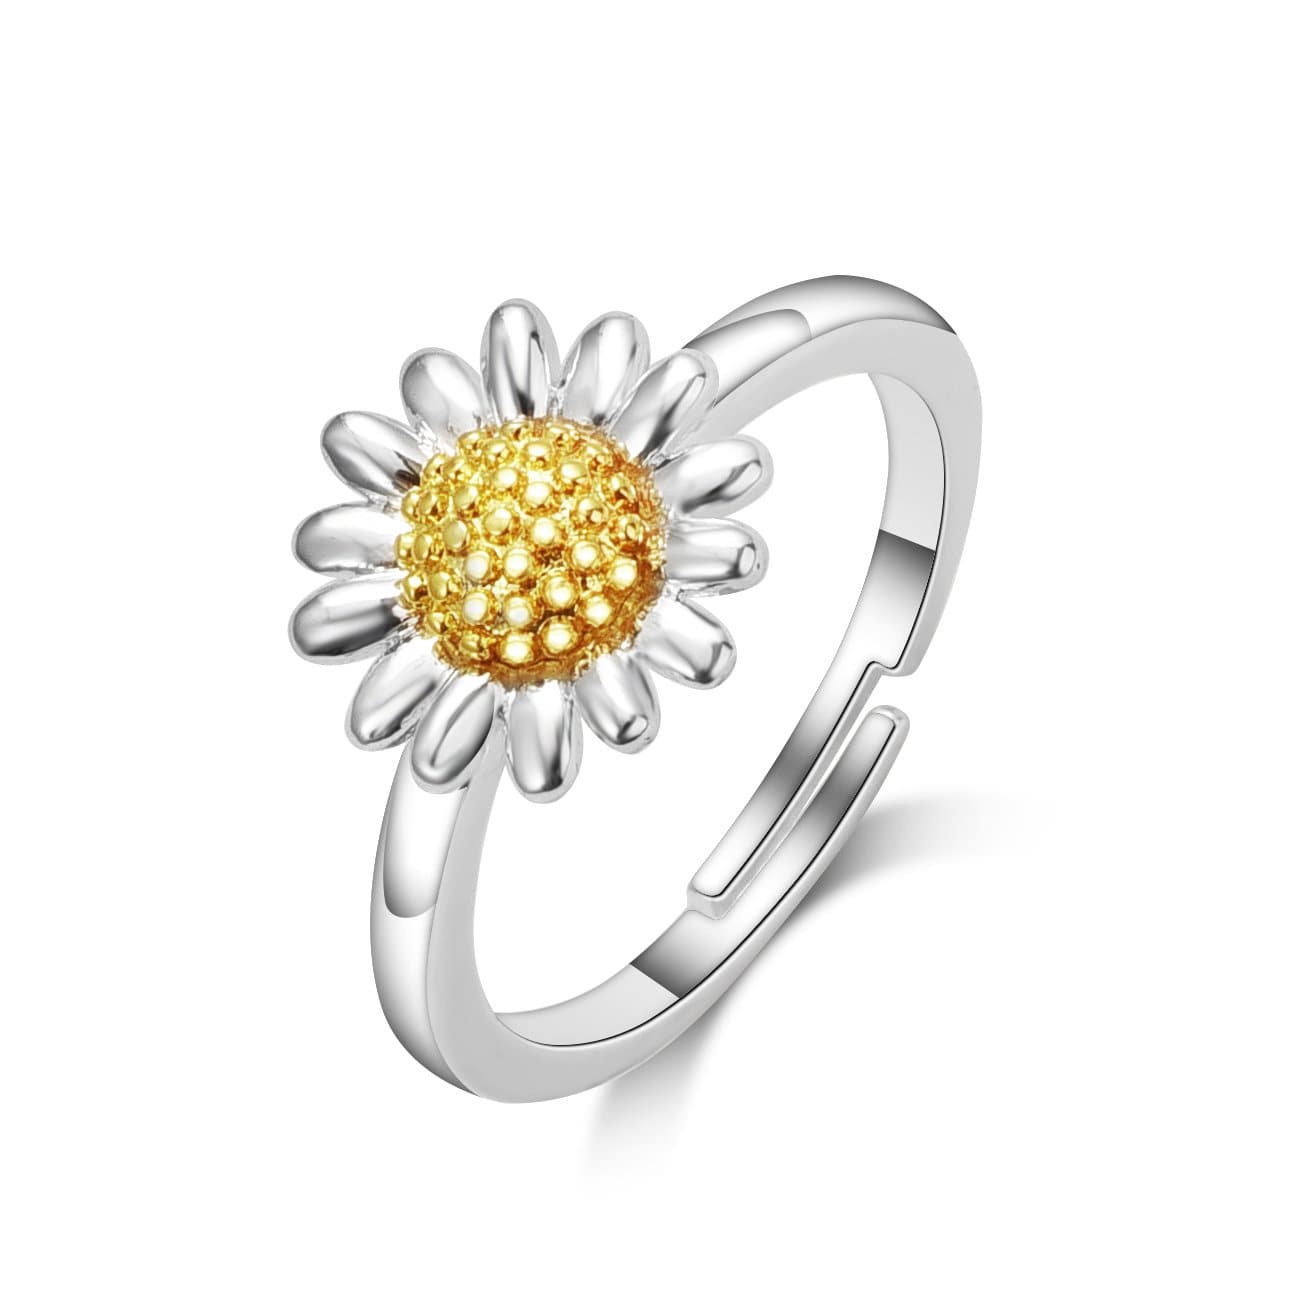 Adjustable Daisy Ring by Philip Jones Jewellery